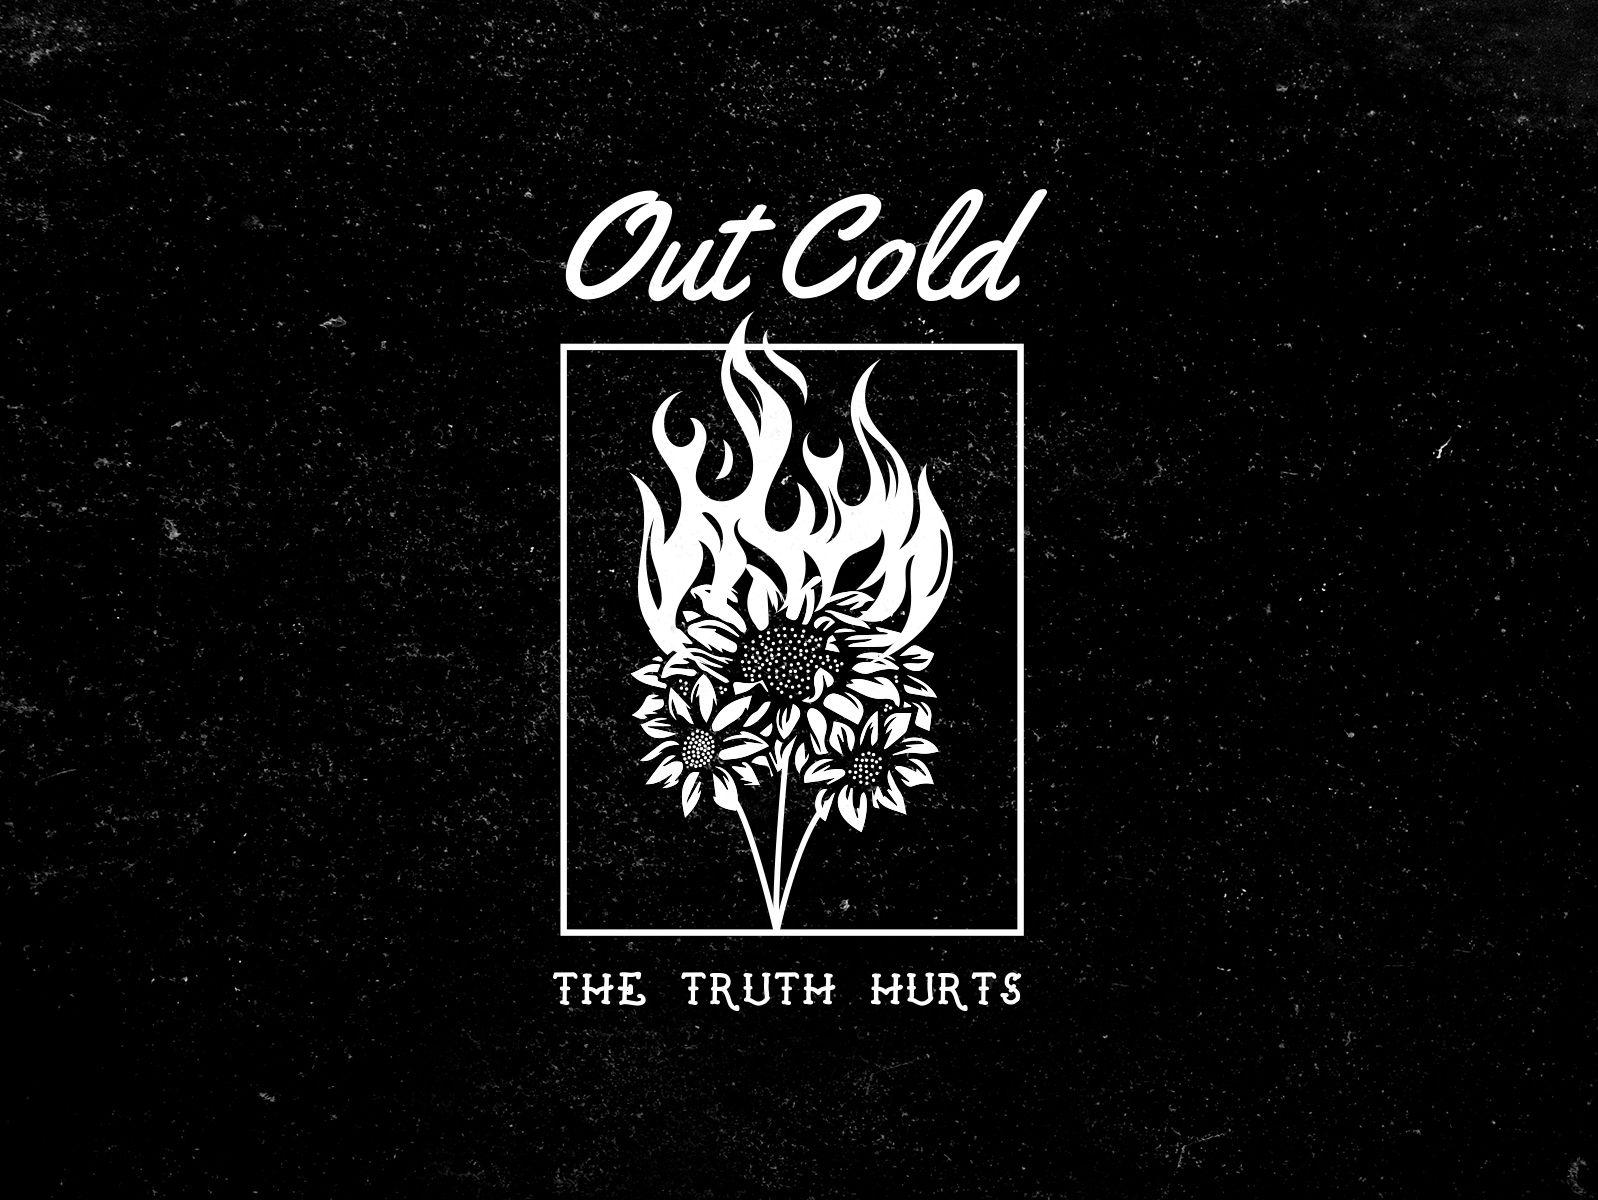 Emo Band Logo - Out Cold Burning Flower